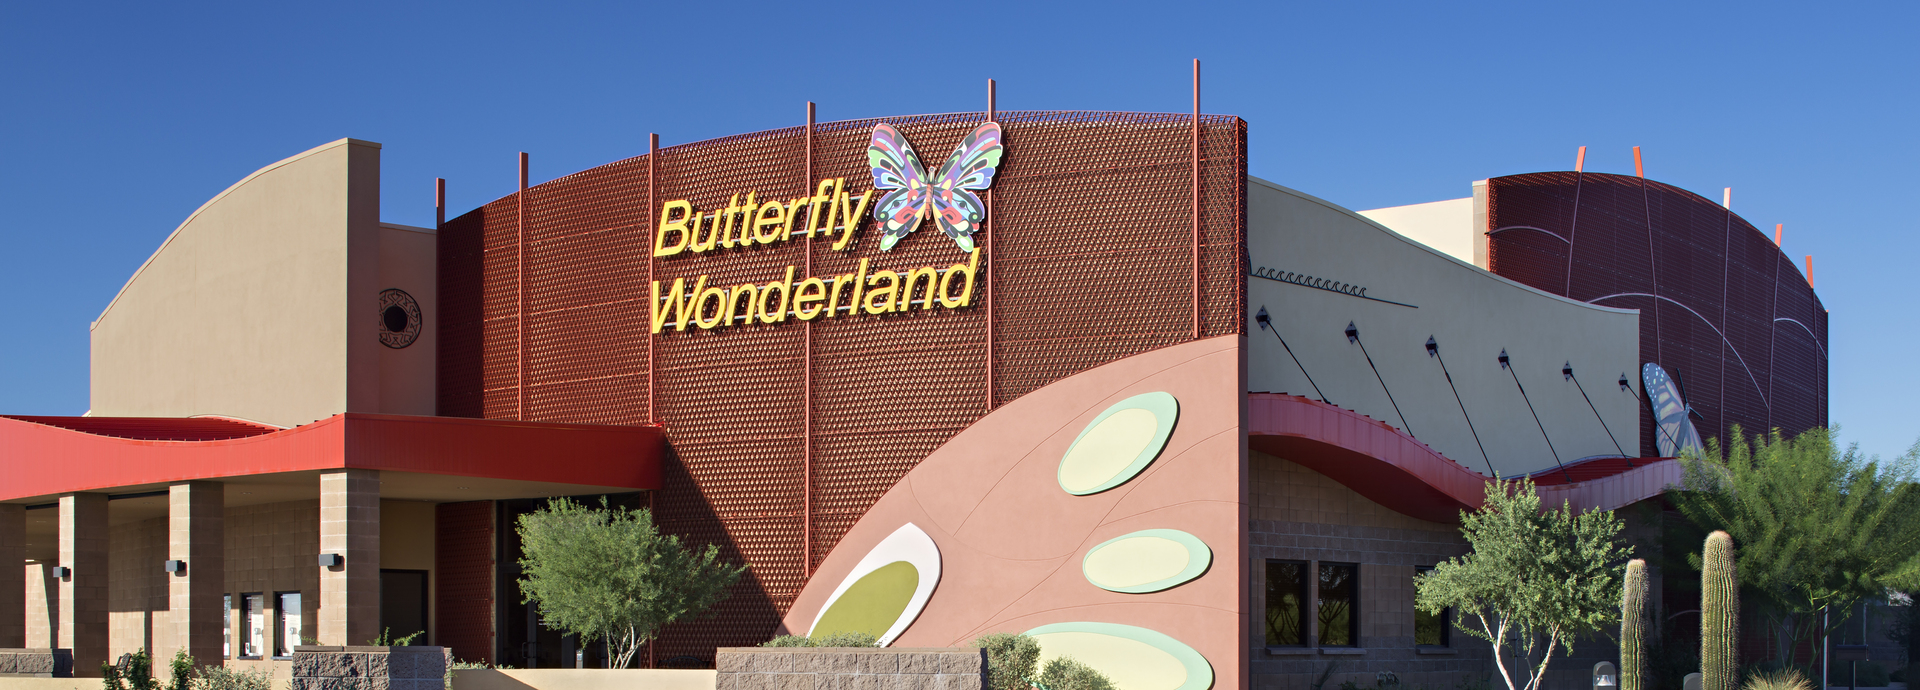 Butterfly Wonderland_1.jpg